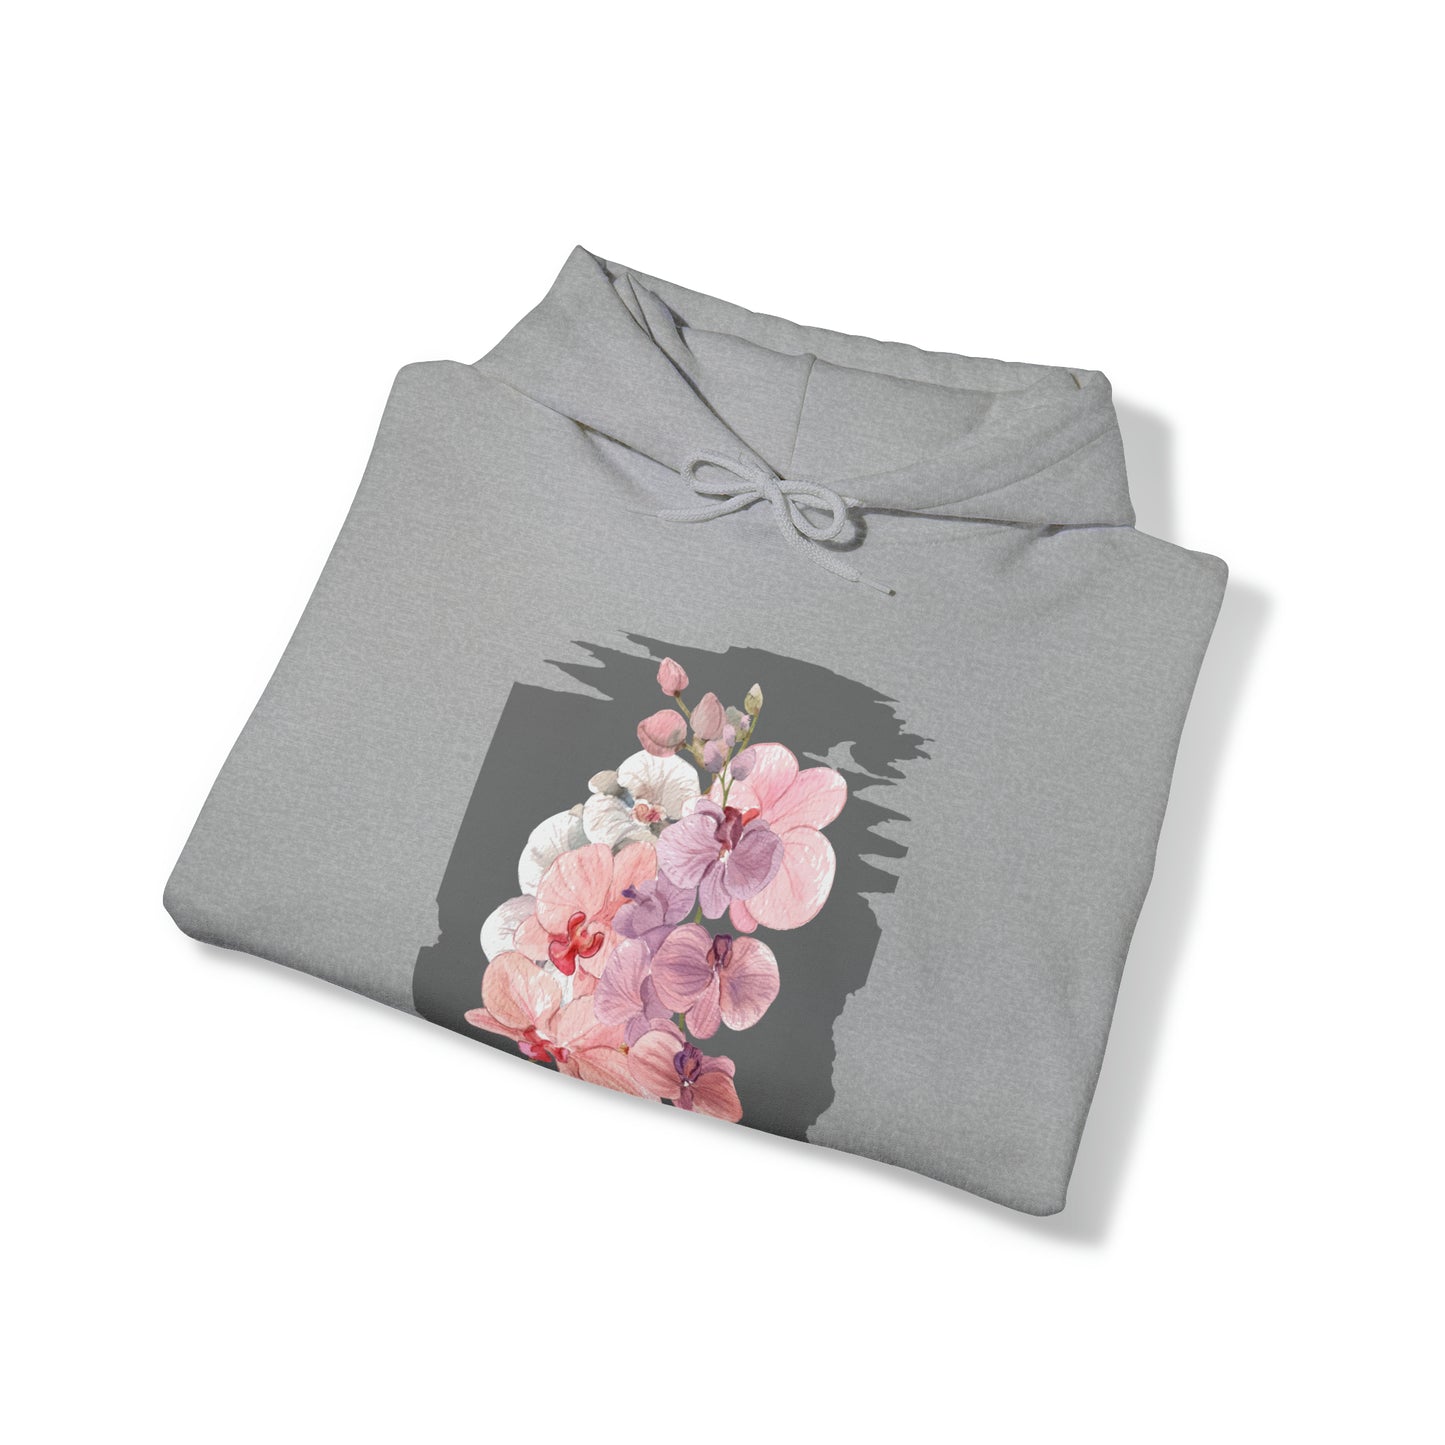 Pink Orchids Unisex Heavy Blend™ Hooded Sweatshirt